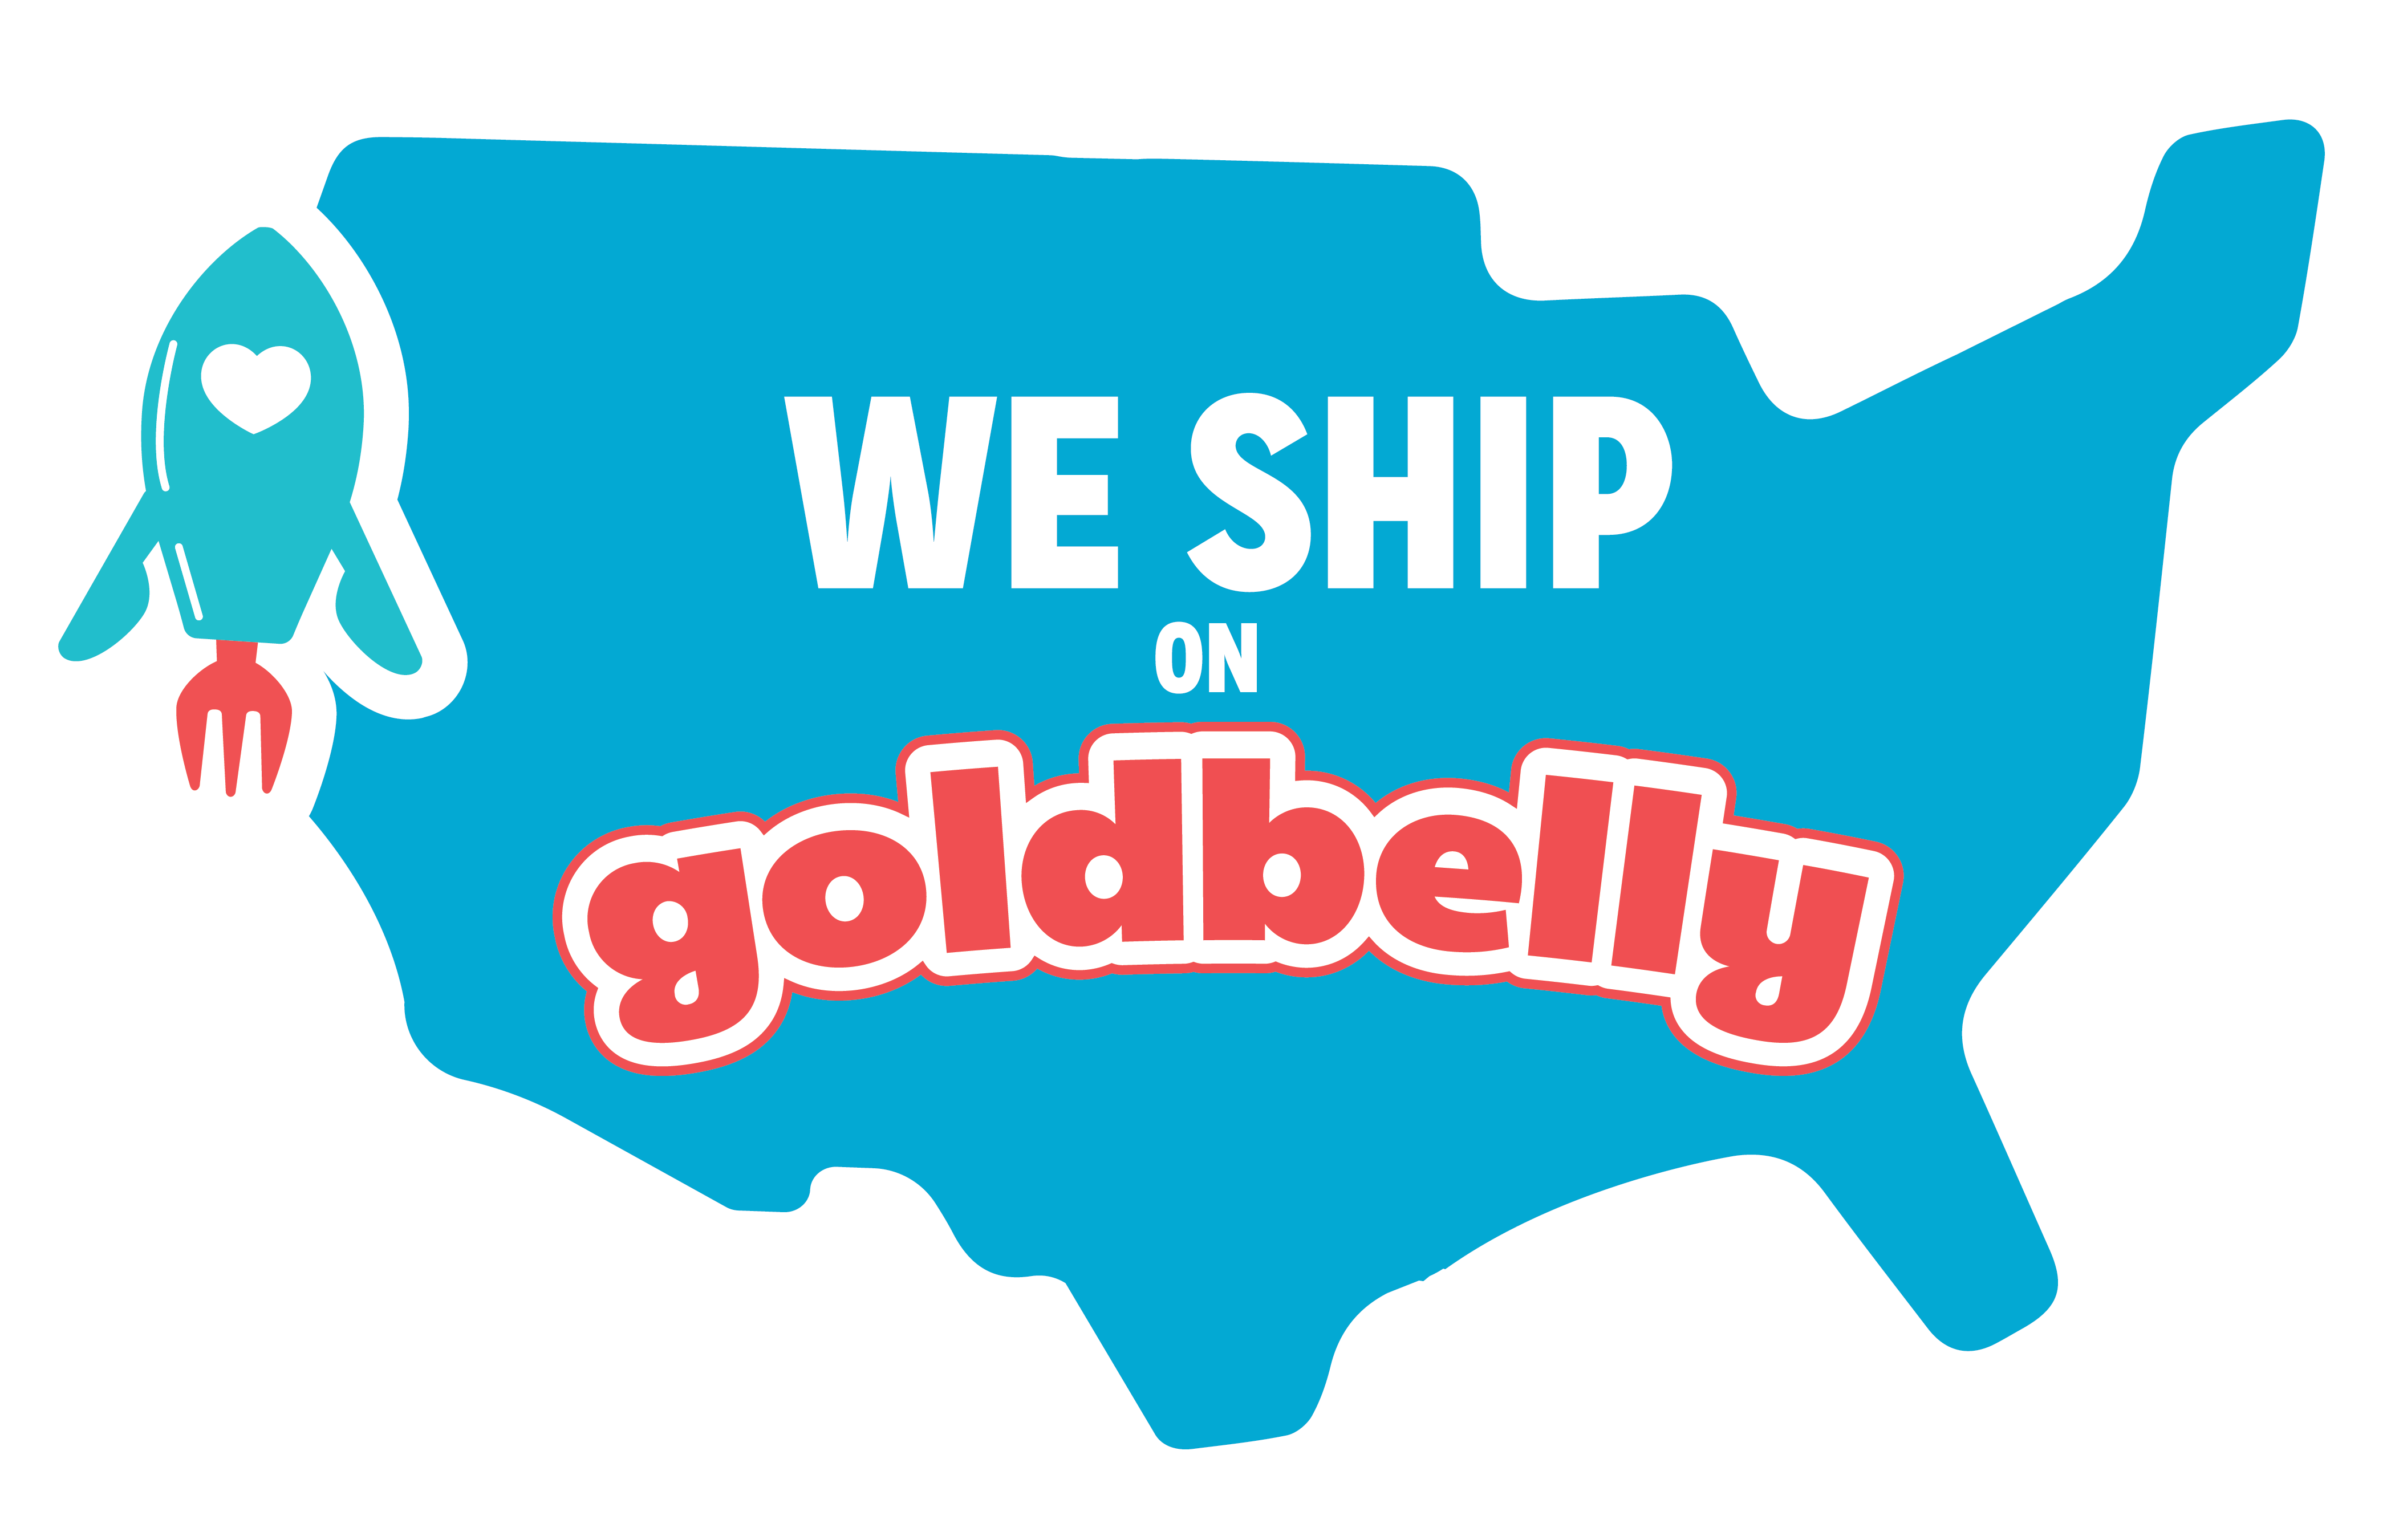 We ship goldbelly